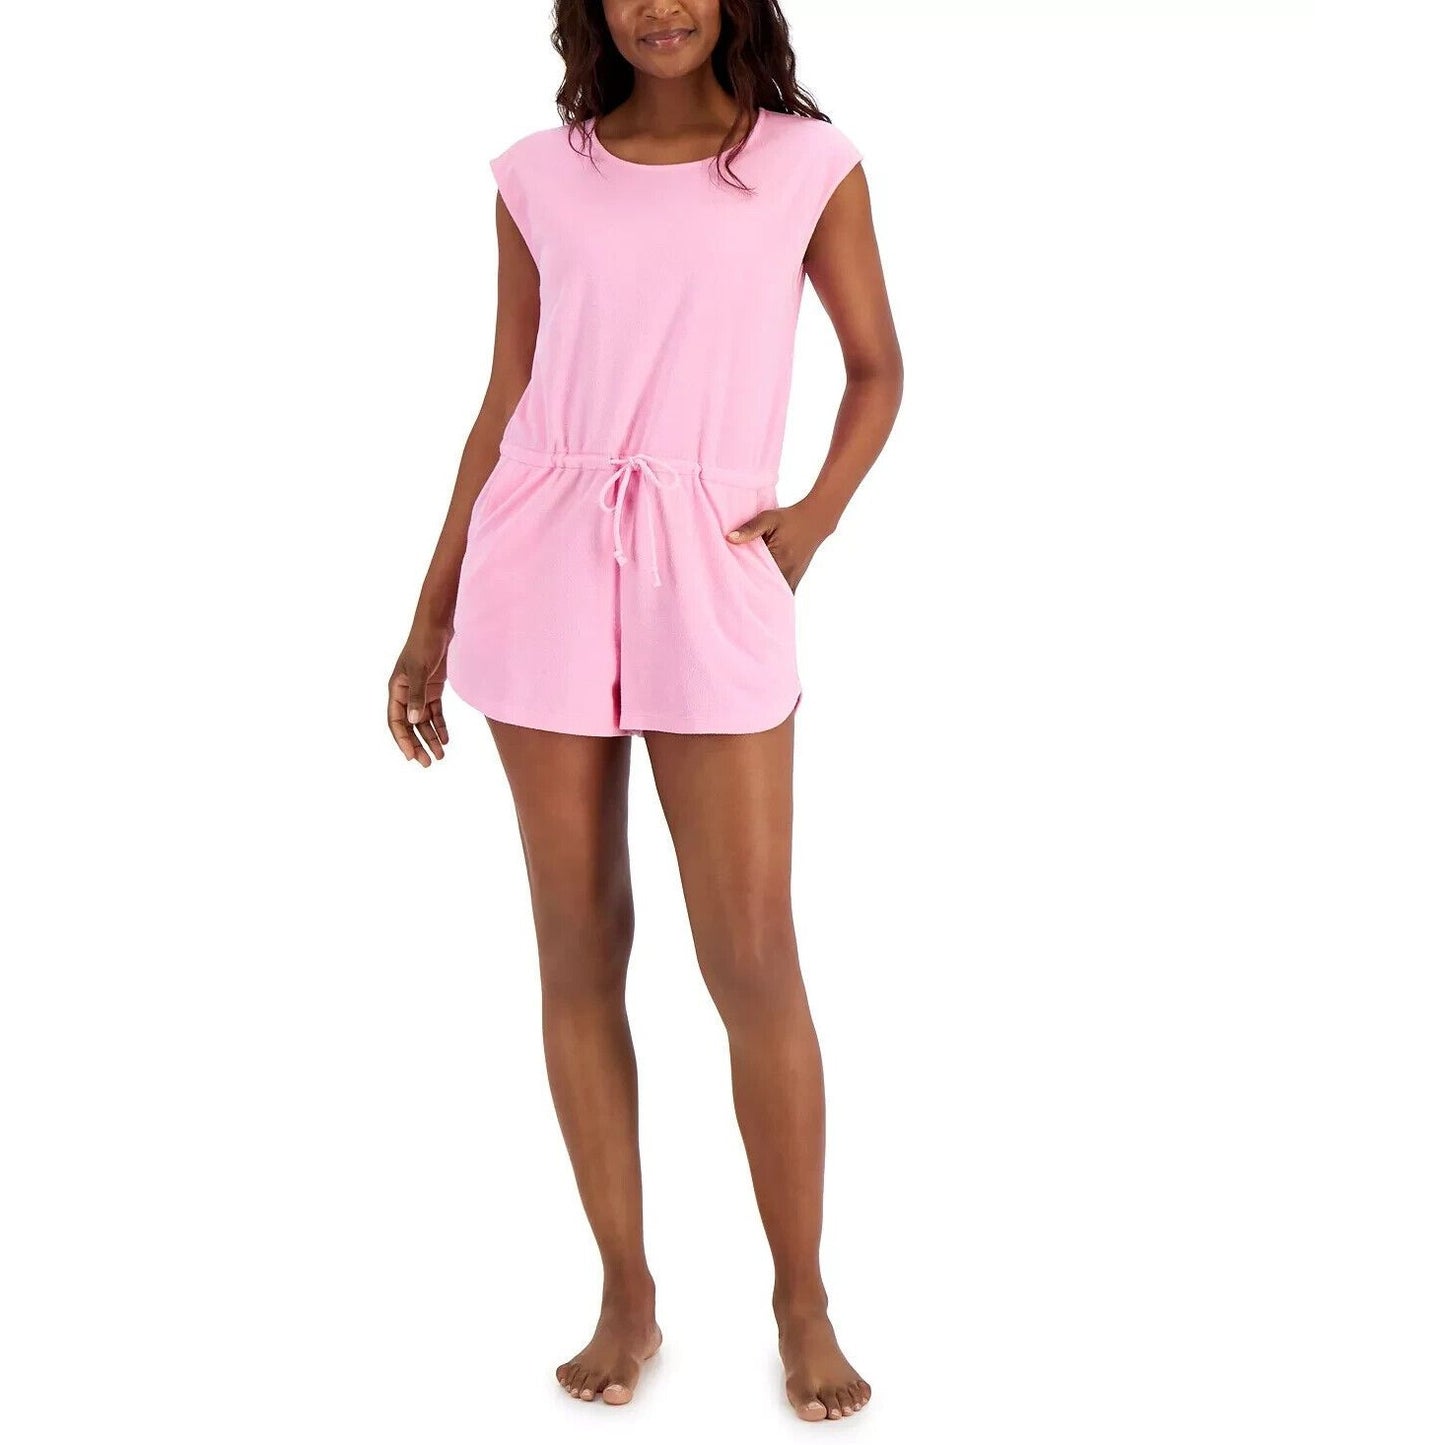 Jenni Women's Sleeveless Terry Cloth Lounge Sleep Romper Pink Heat Small nwt